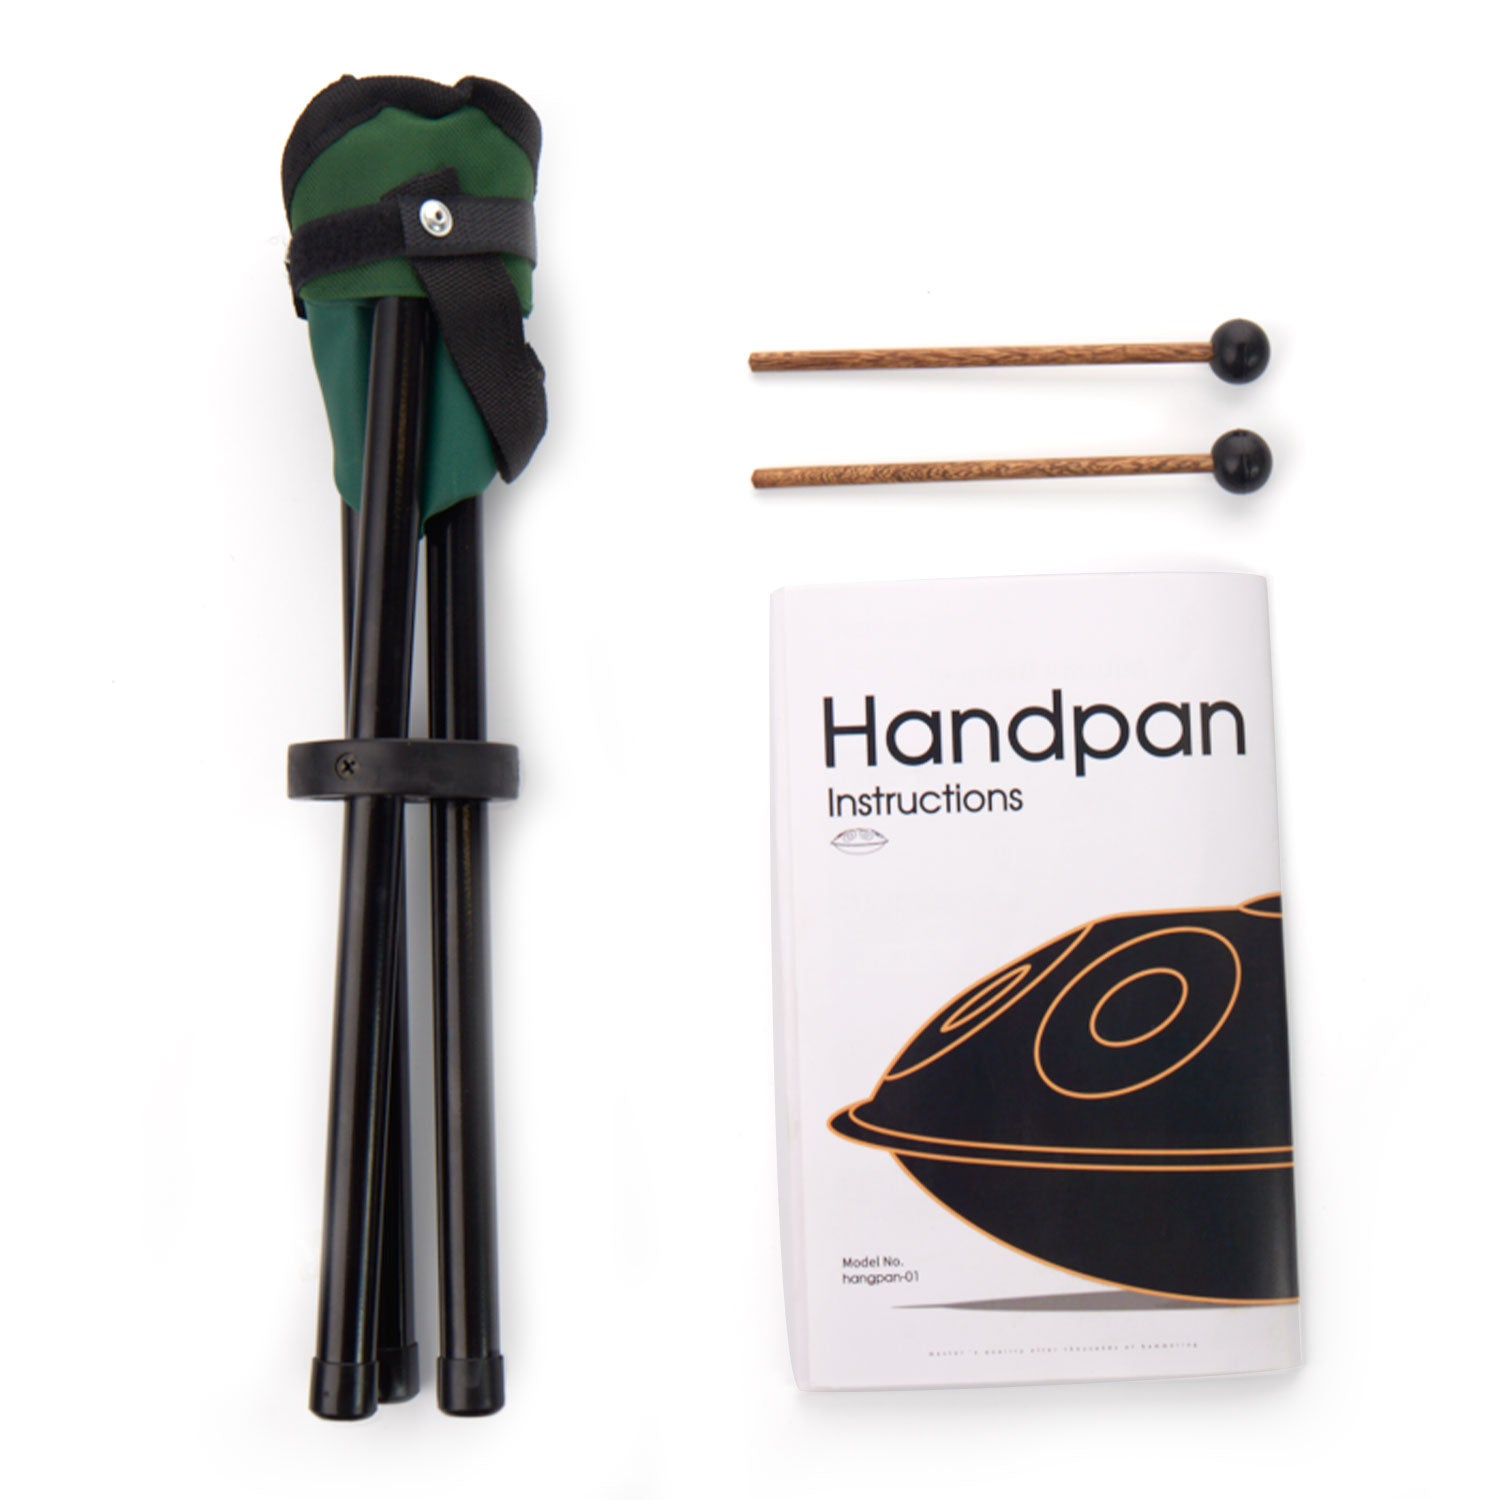 Handpan accessories